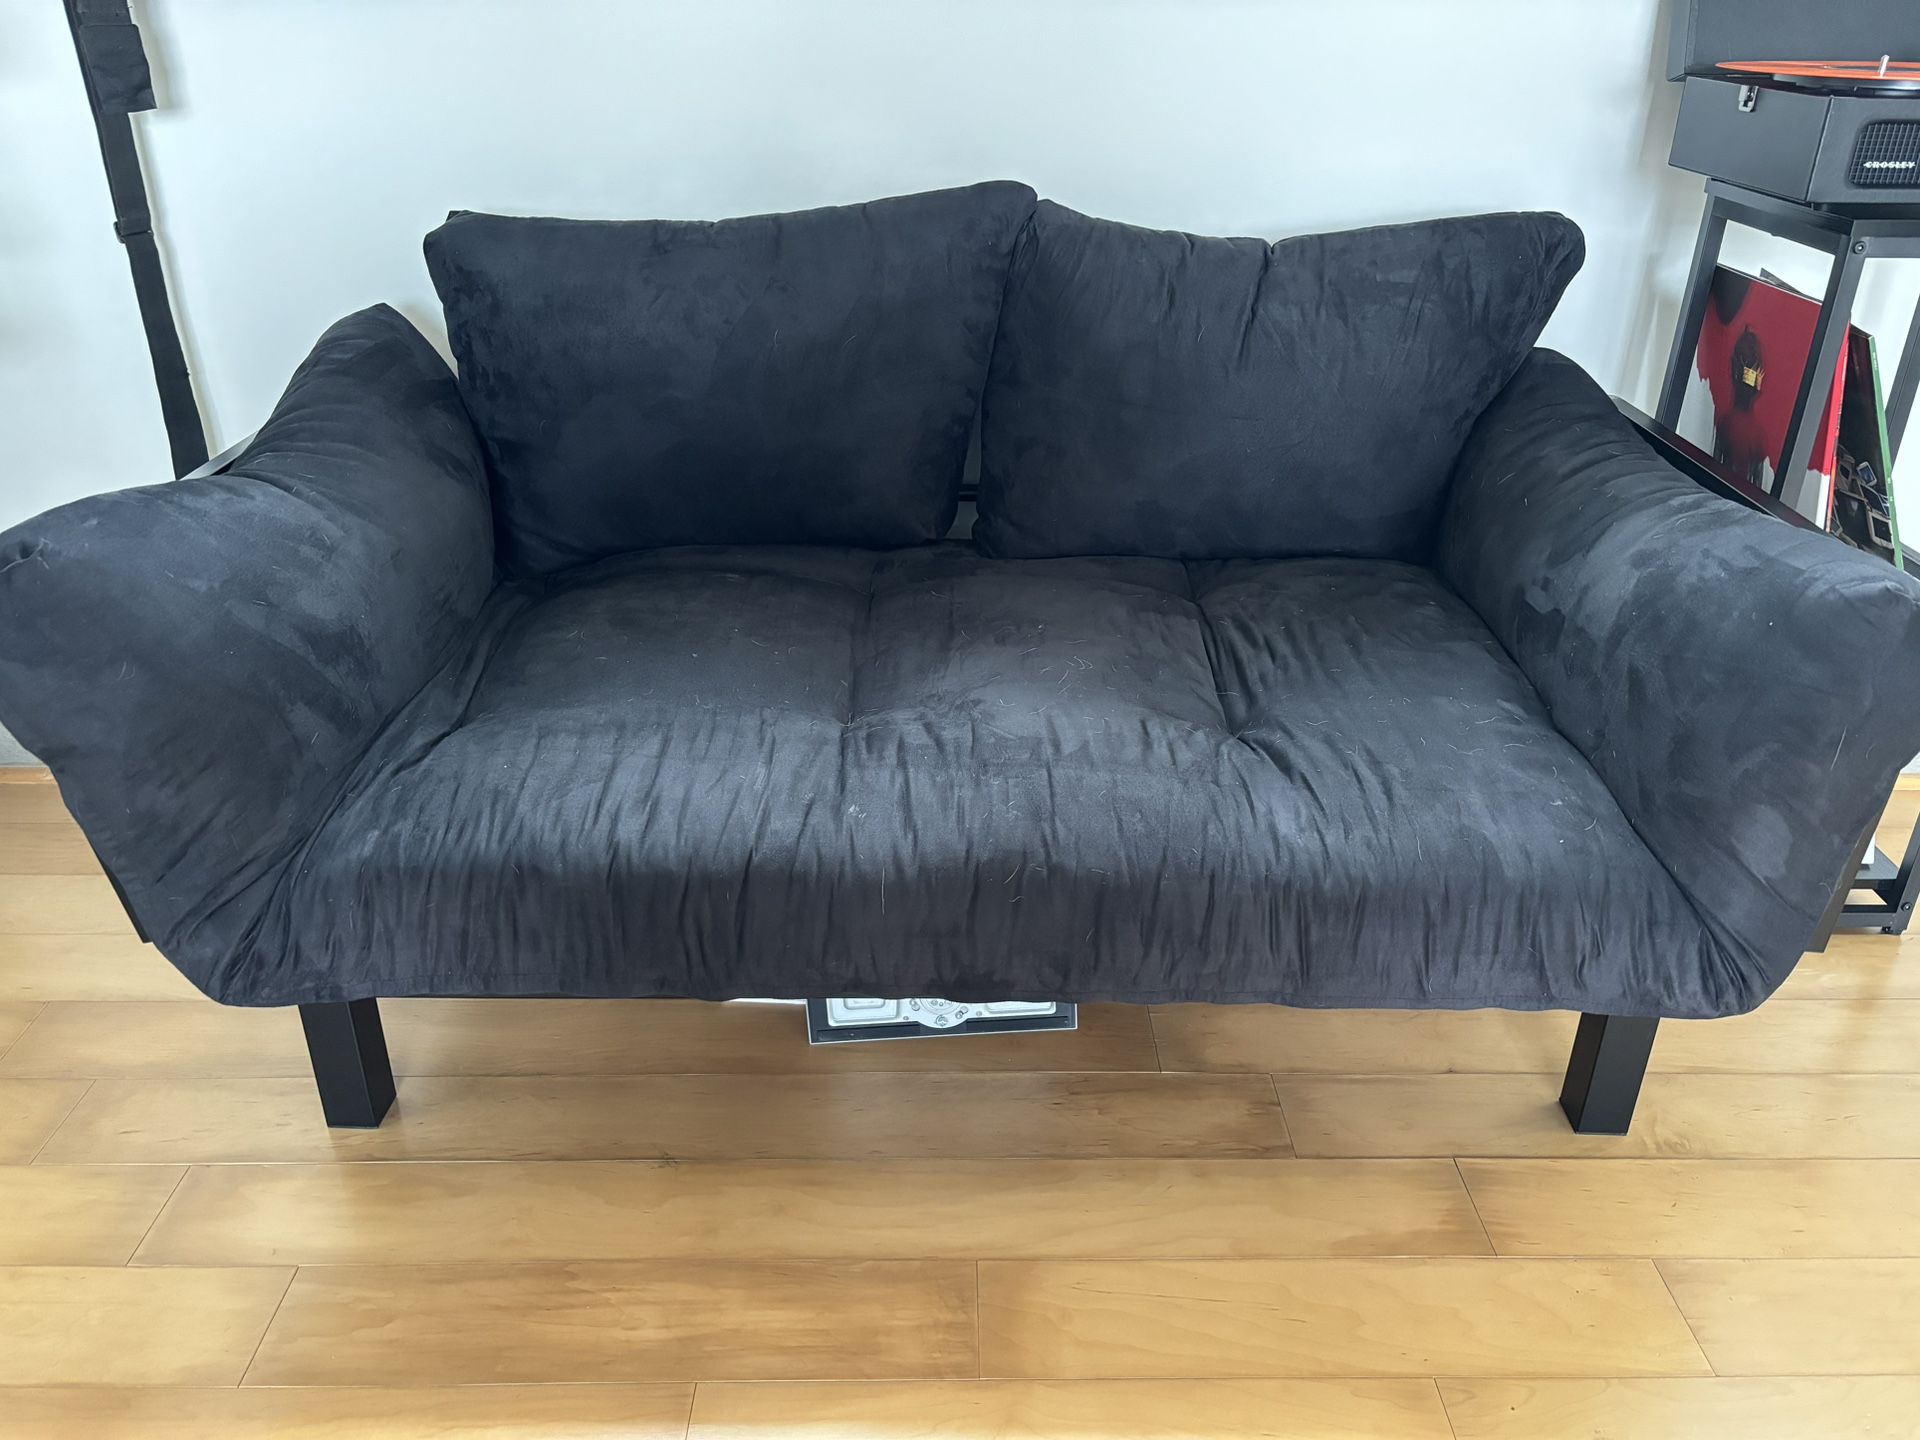 Black foldout futon  Purchased Jan. 2023